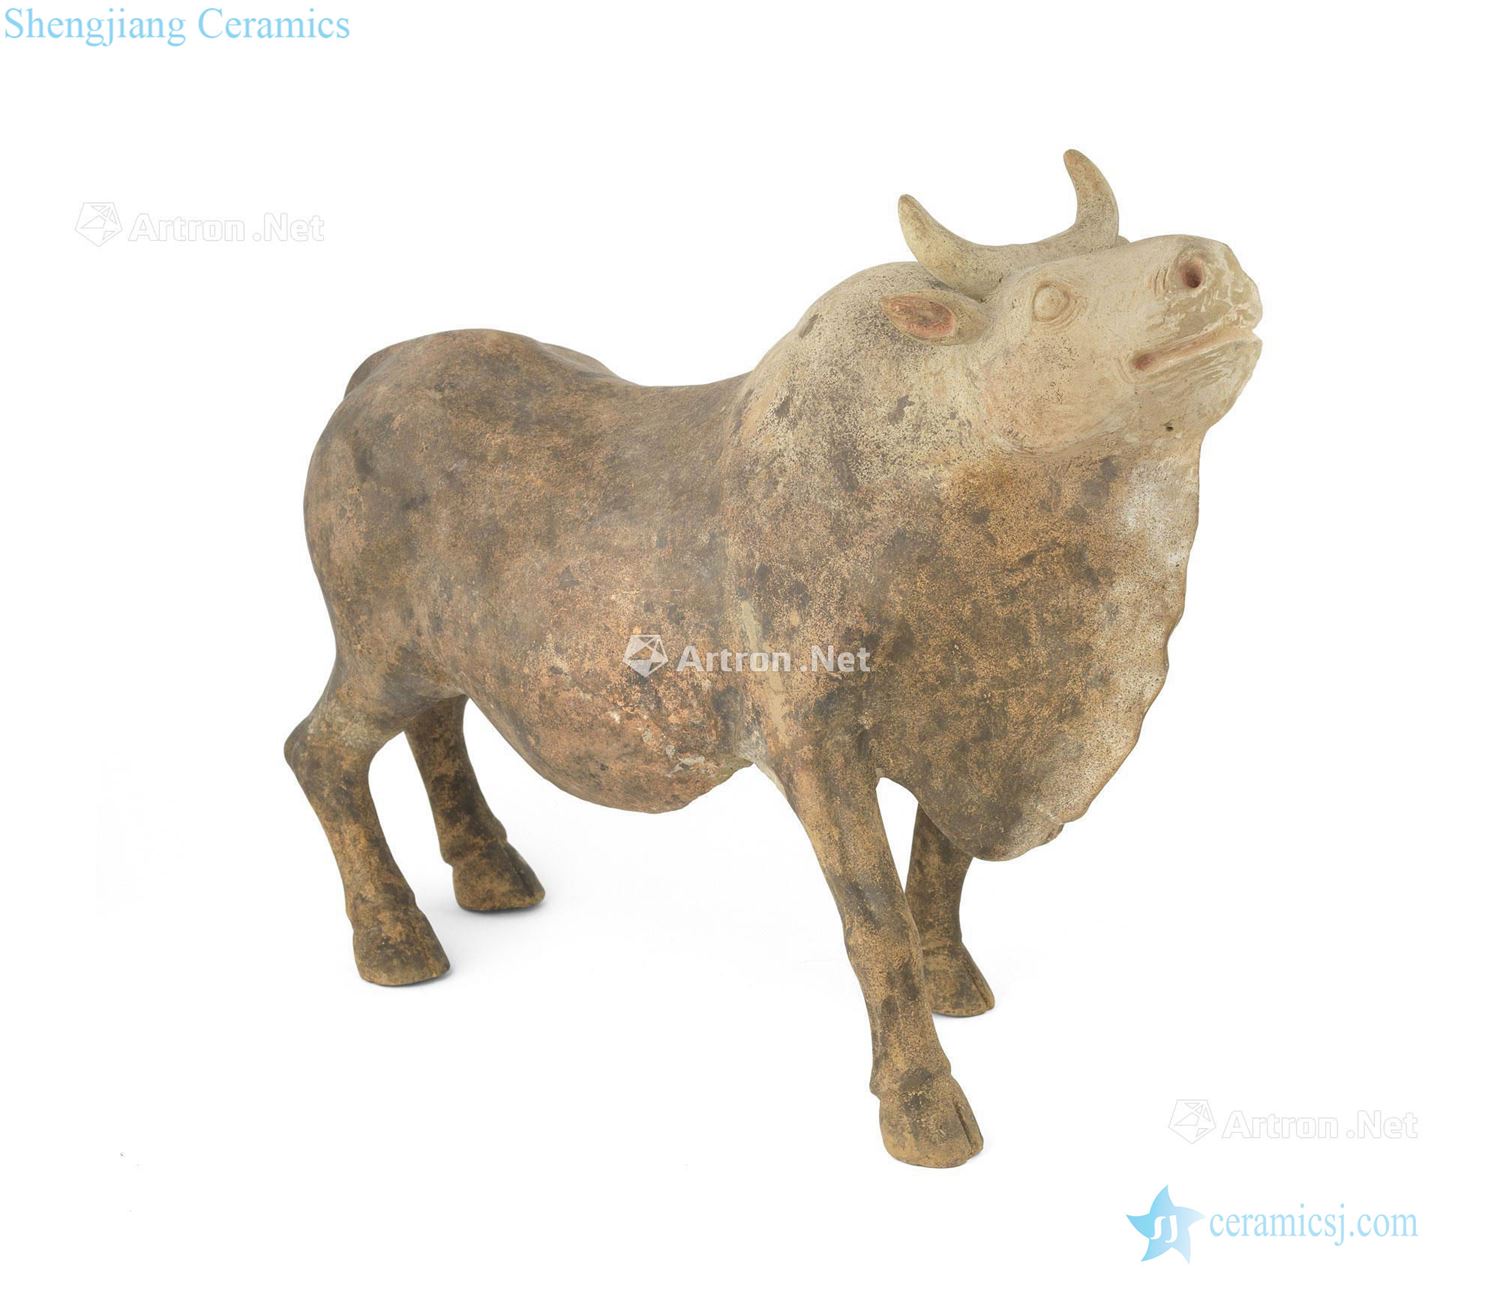 Tang pottery figurines of buffalo